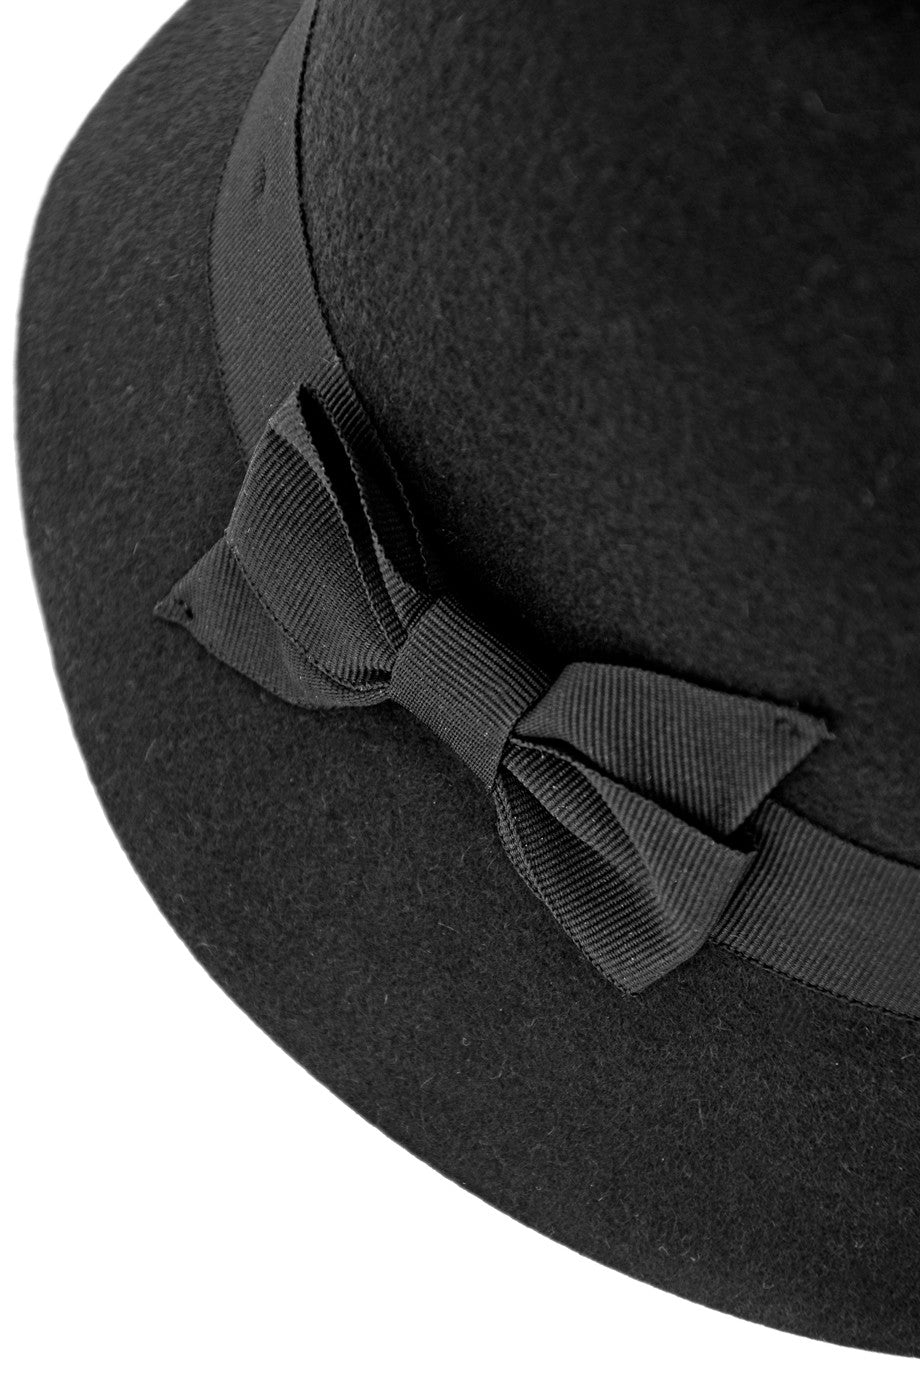 Mαύρο Μάλλινο Καπέλο | Γυναικεία Καπέλα